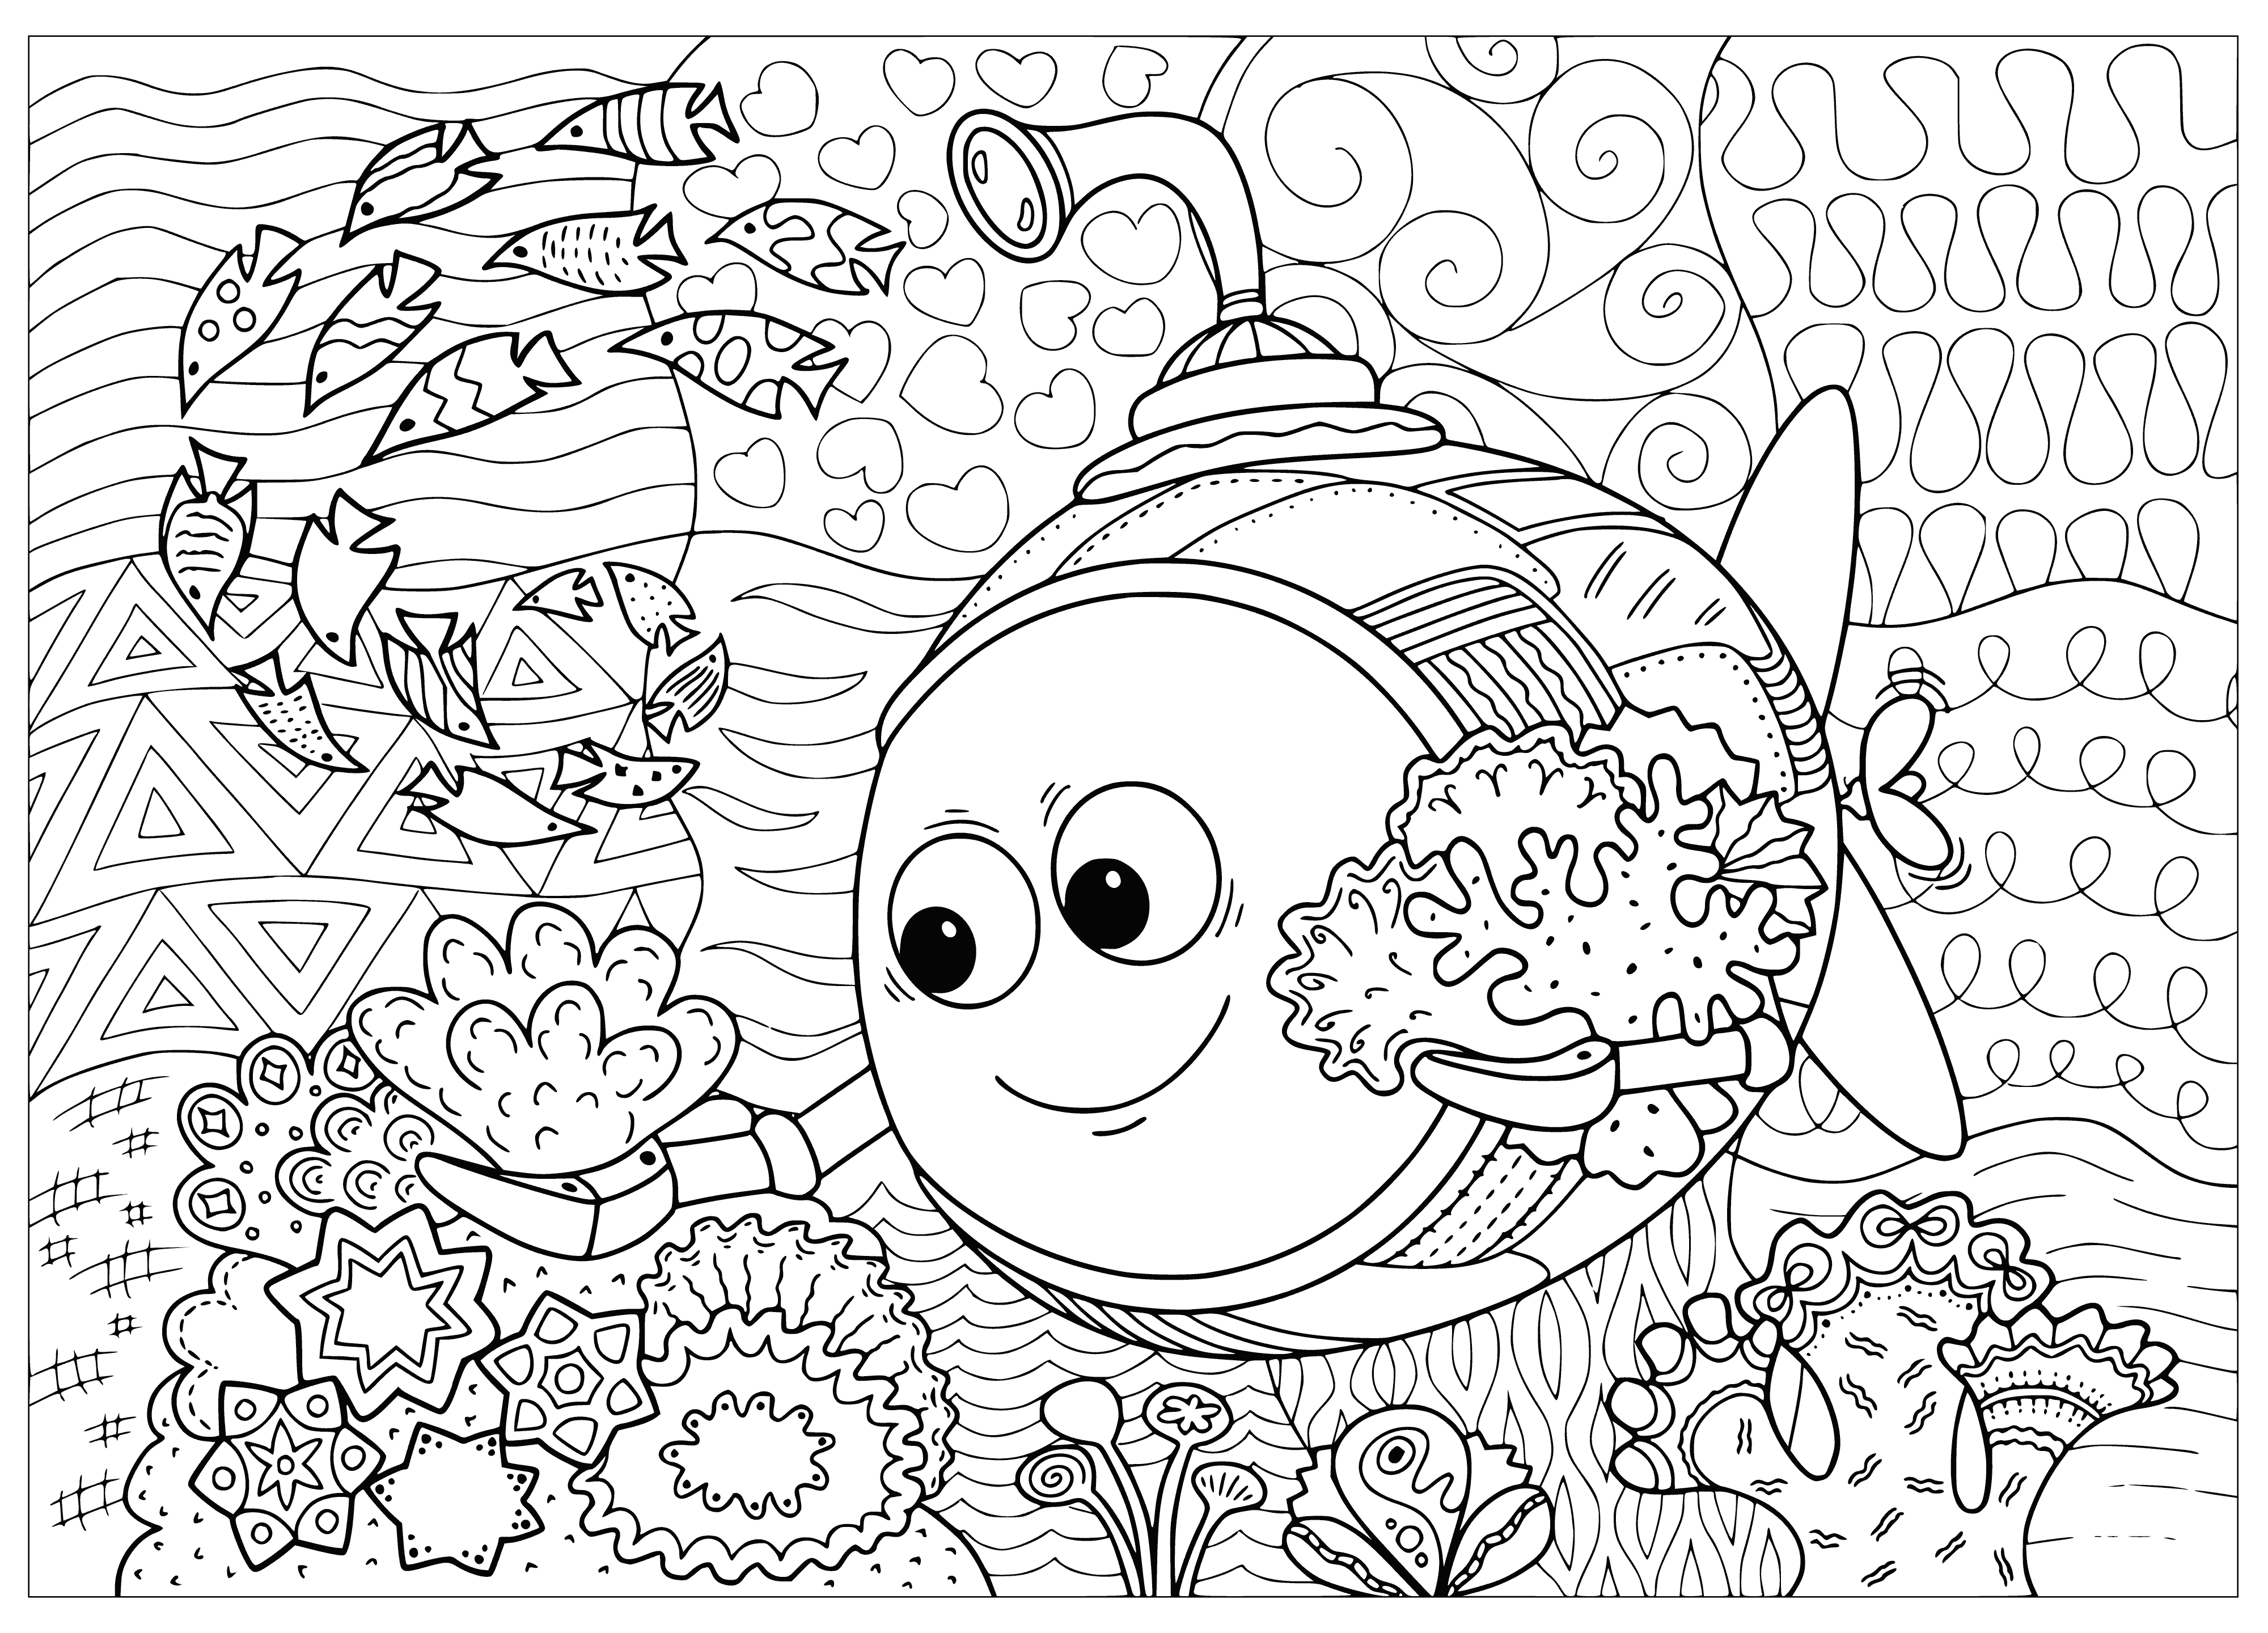 Bathyscaphe explores a coral reef coloring page